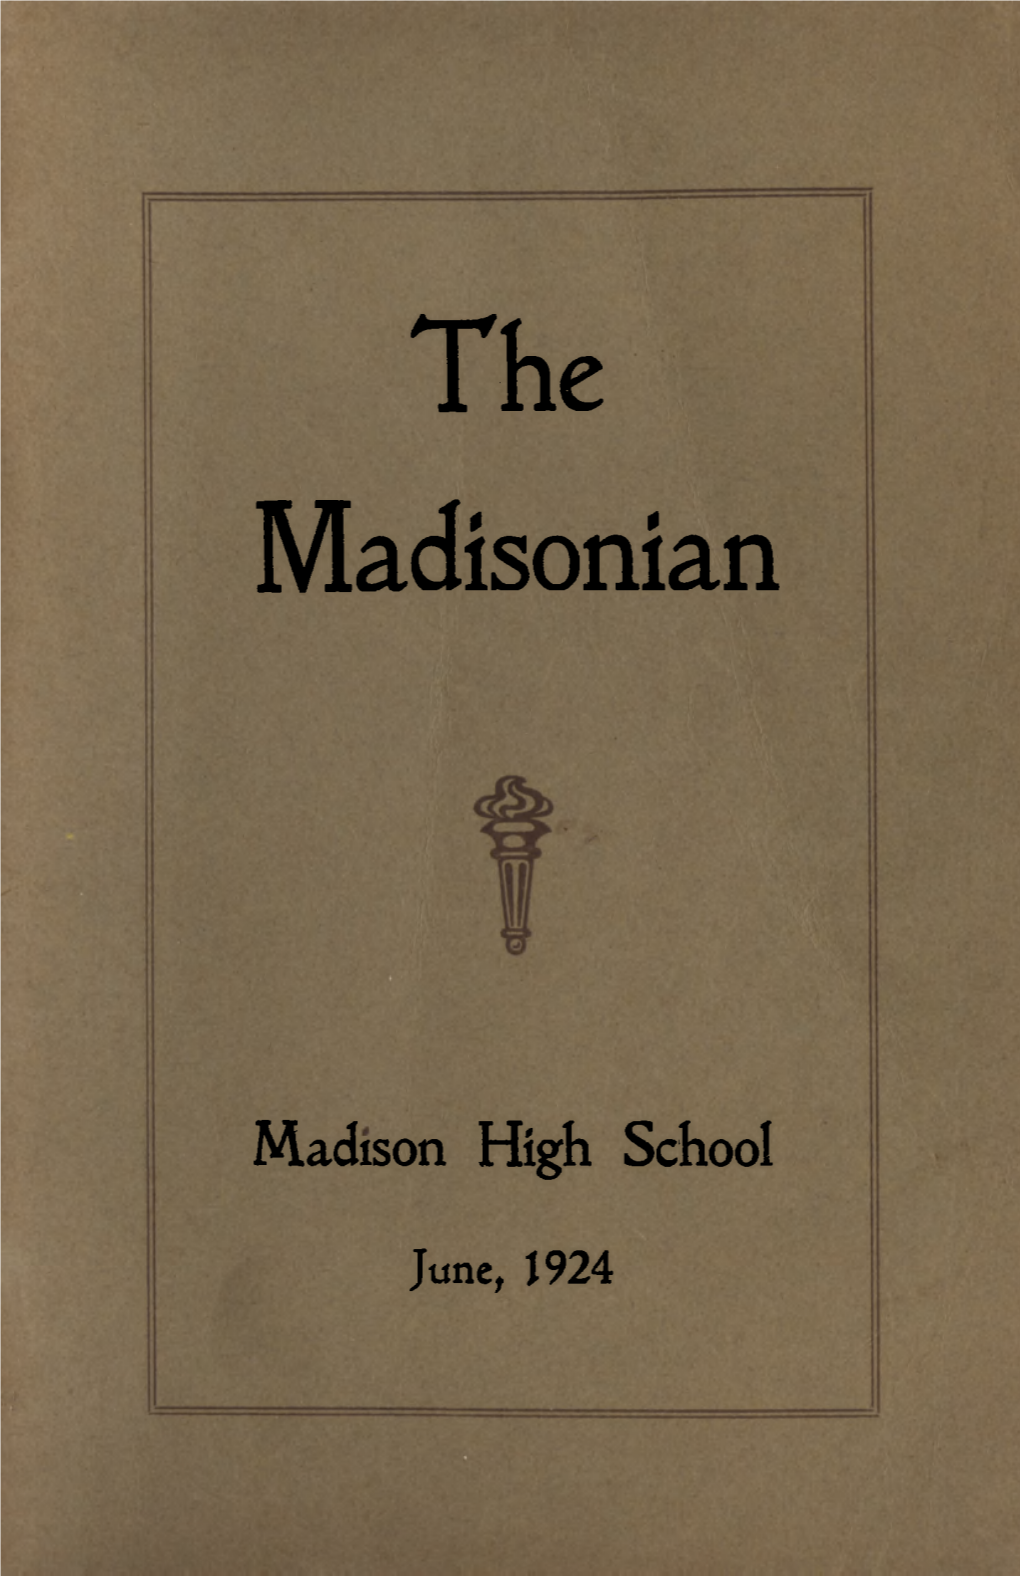 The Madisonian